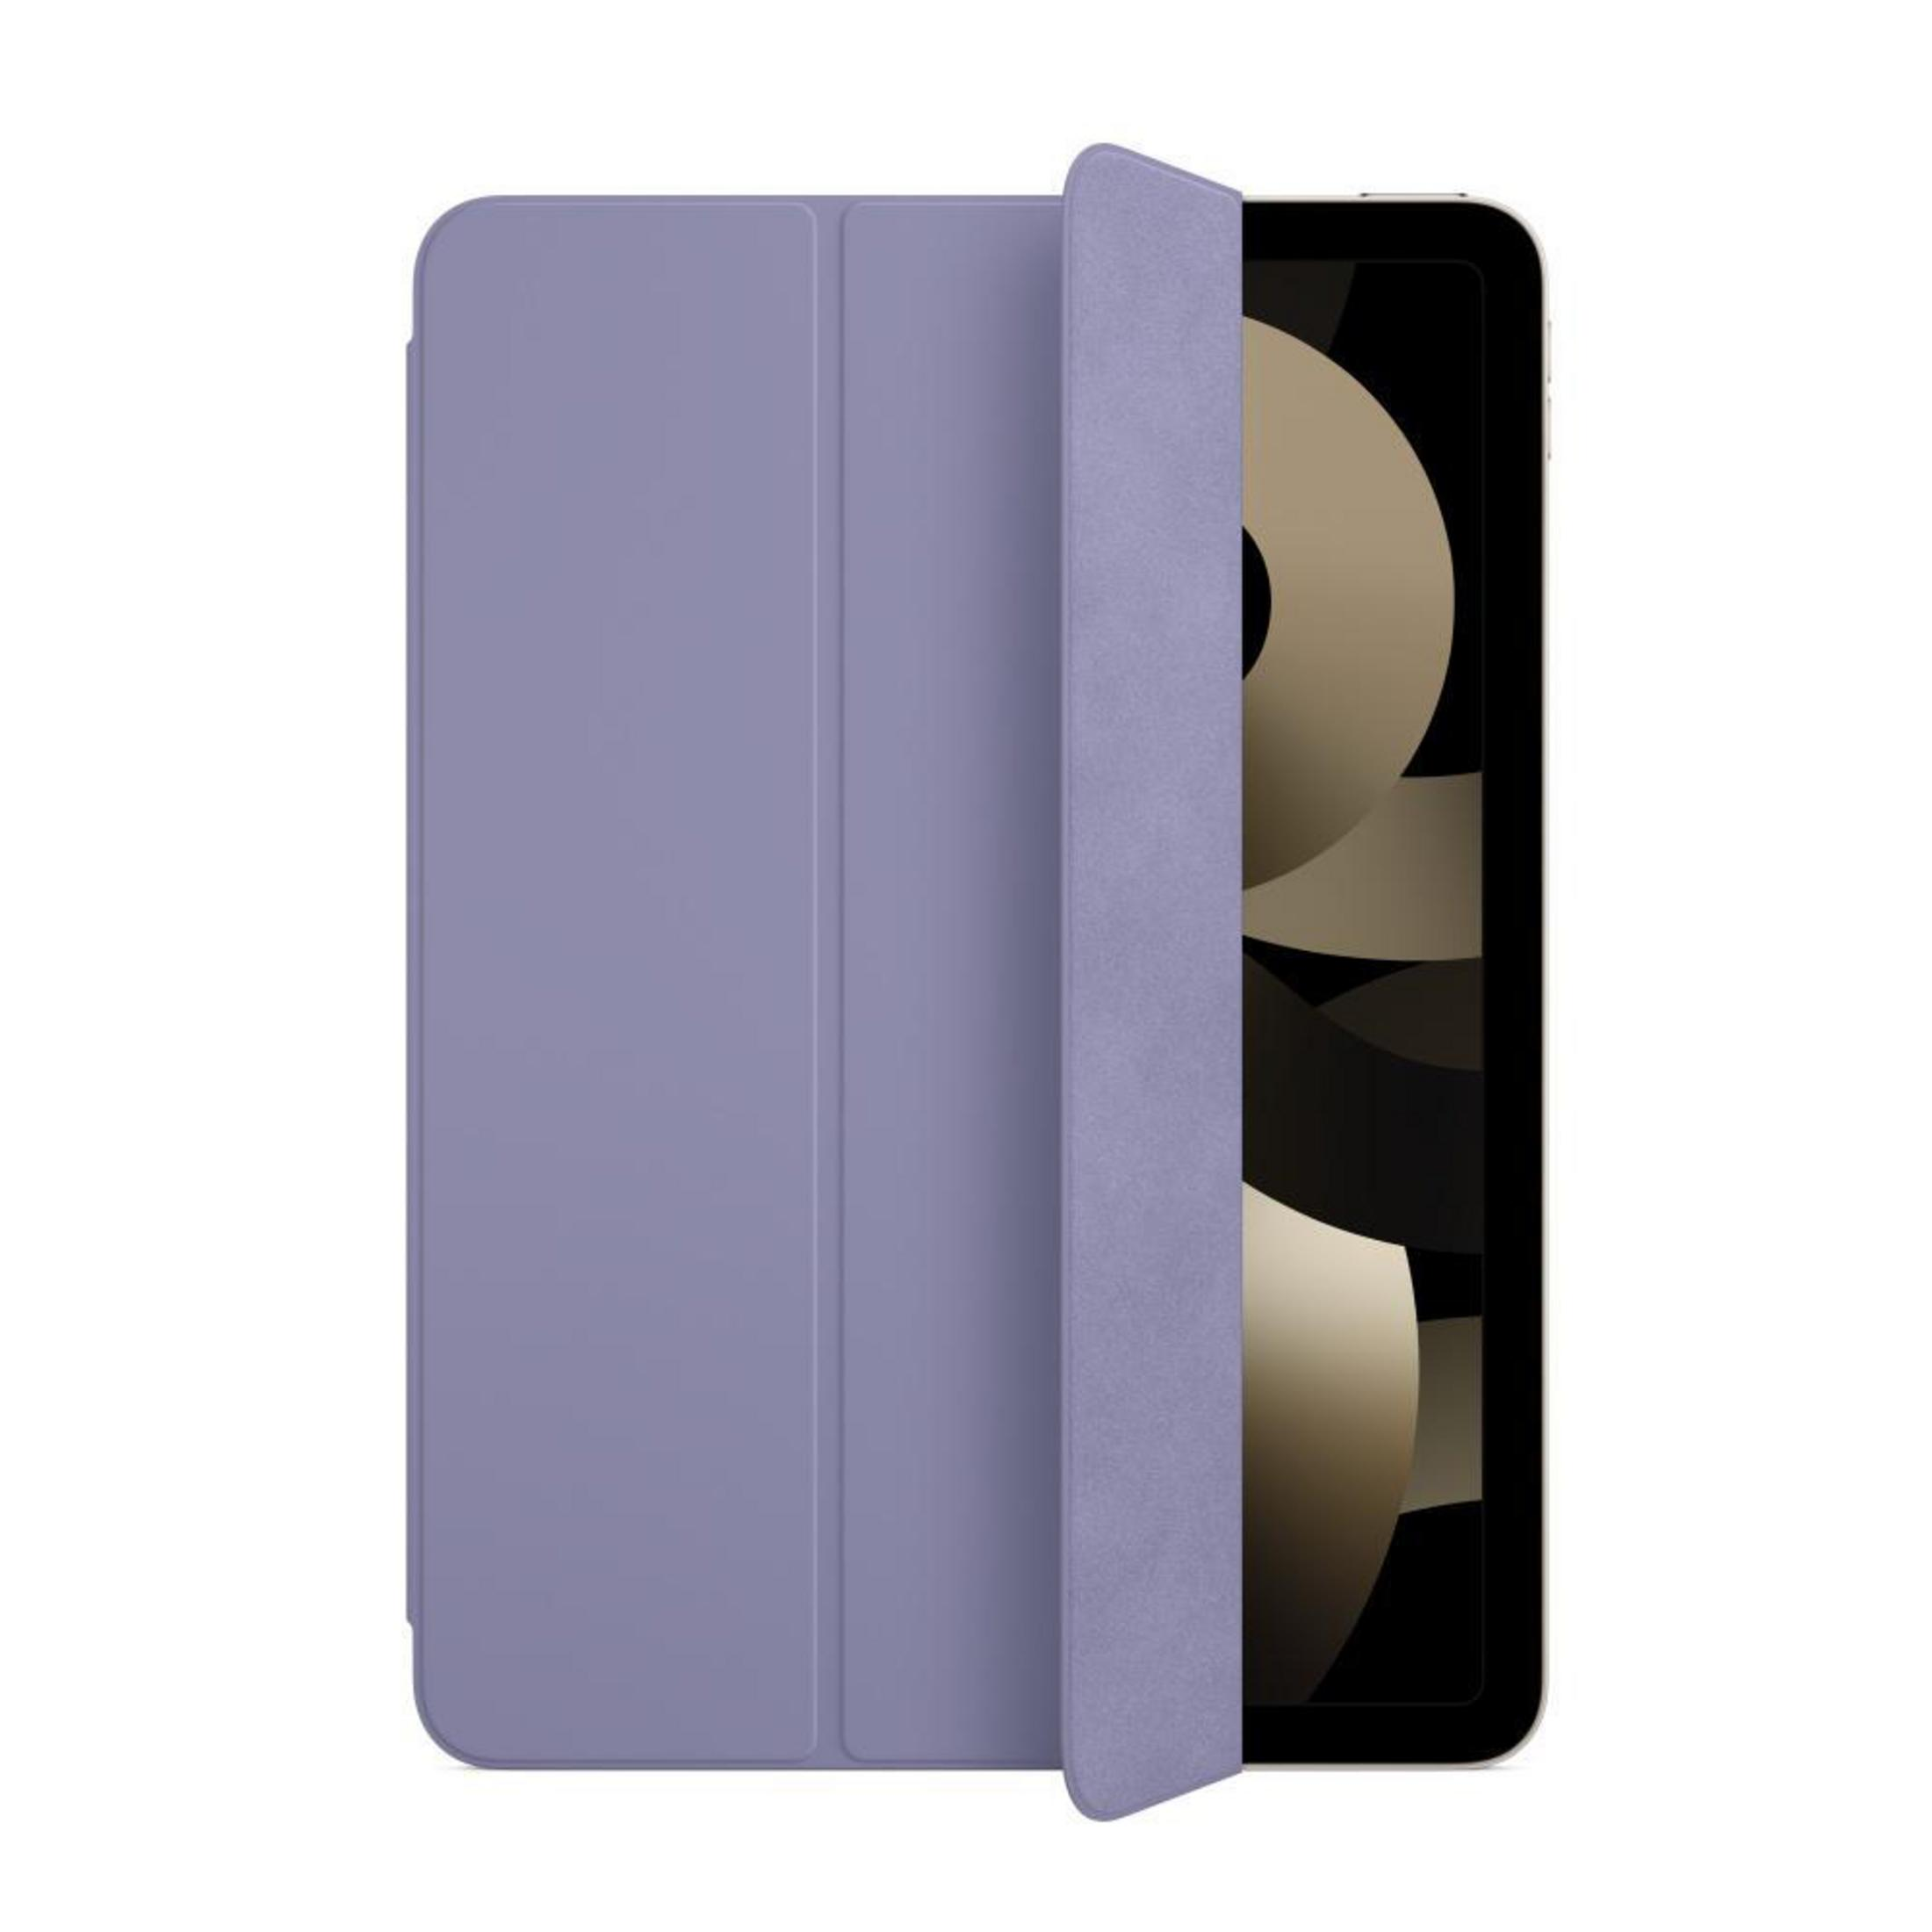 LAV. SMART IPAD AIR (5. GEN.) für E. Apple Polyurethan, MNA63ZM/A Englisch APPLE Bookcover FOLIO Tablethülle Lavendel